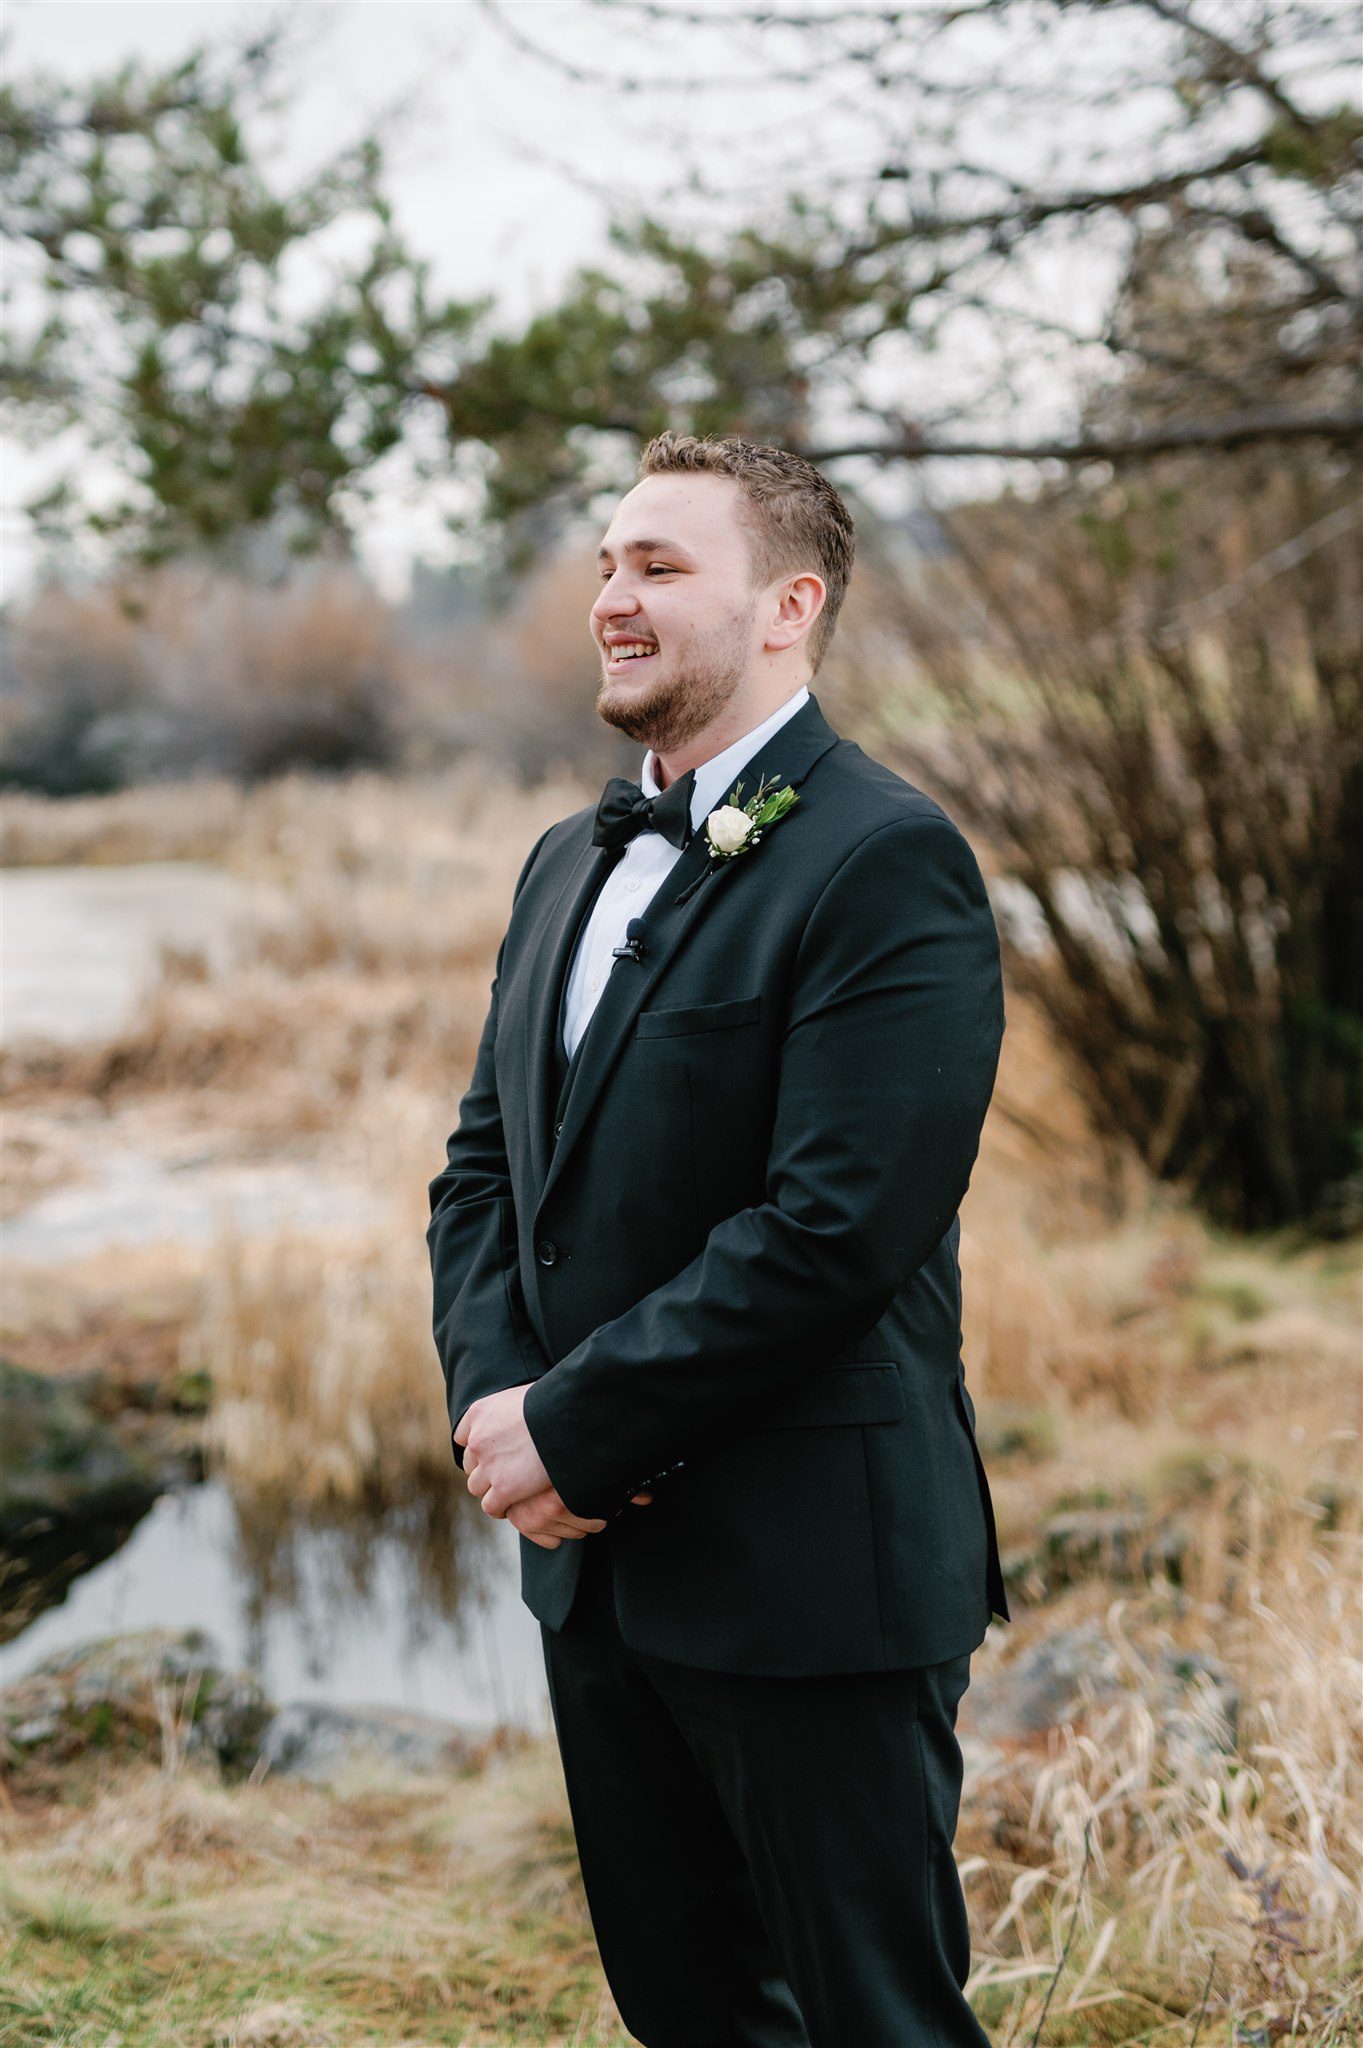 Bend Oregon wedding locations